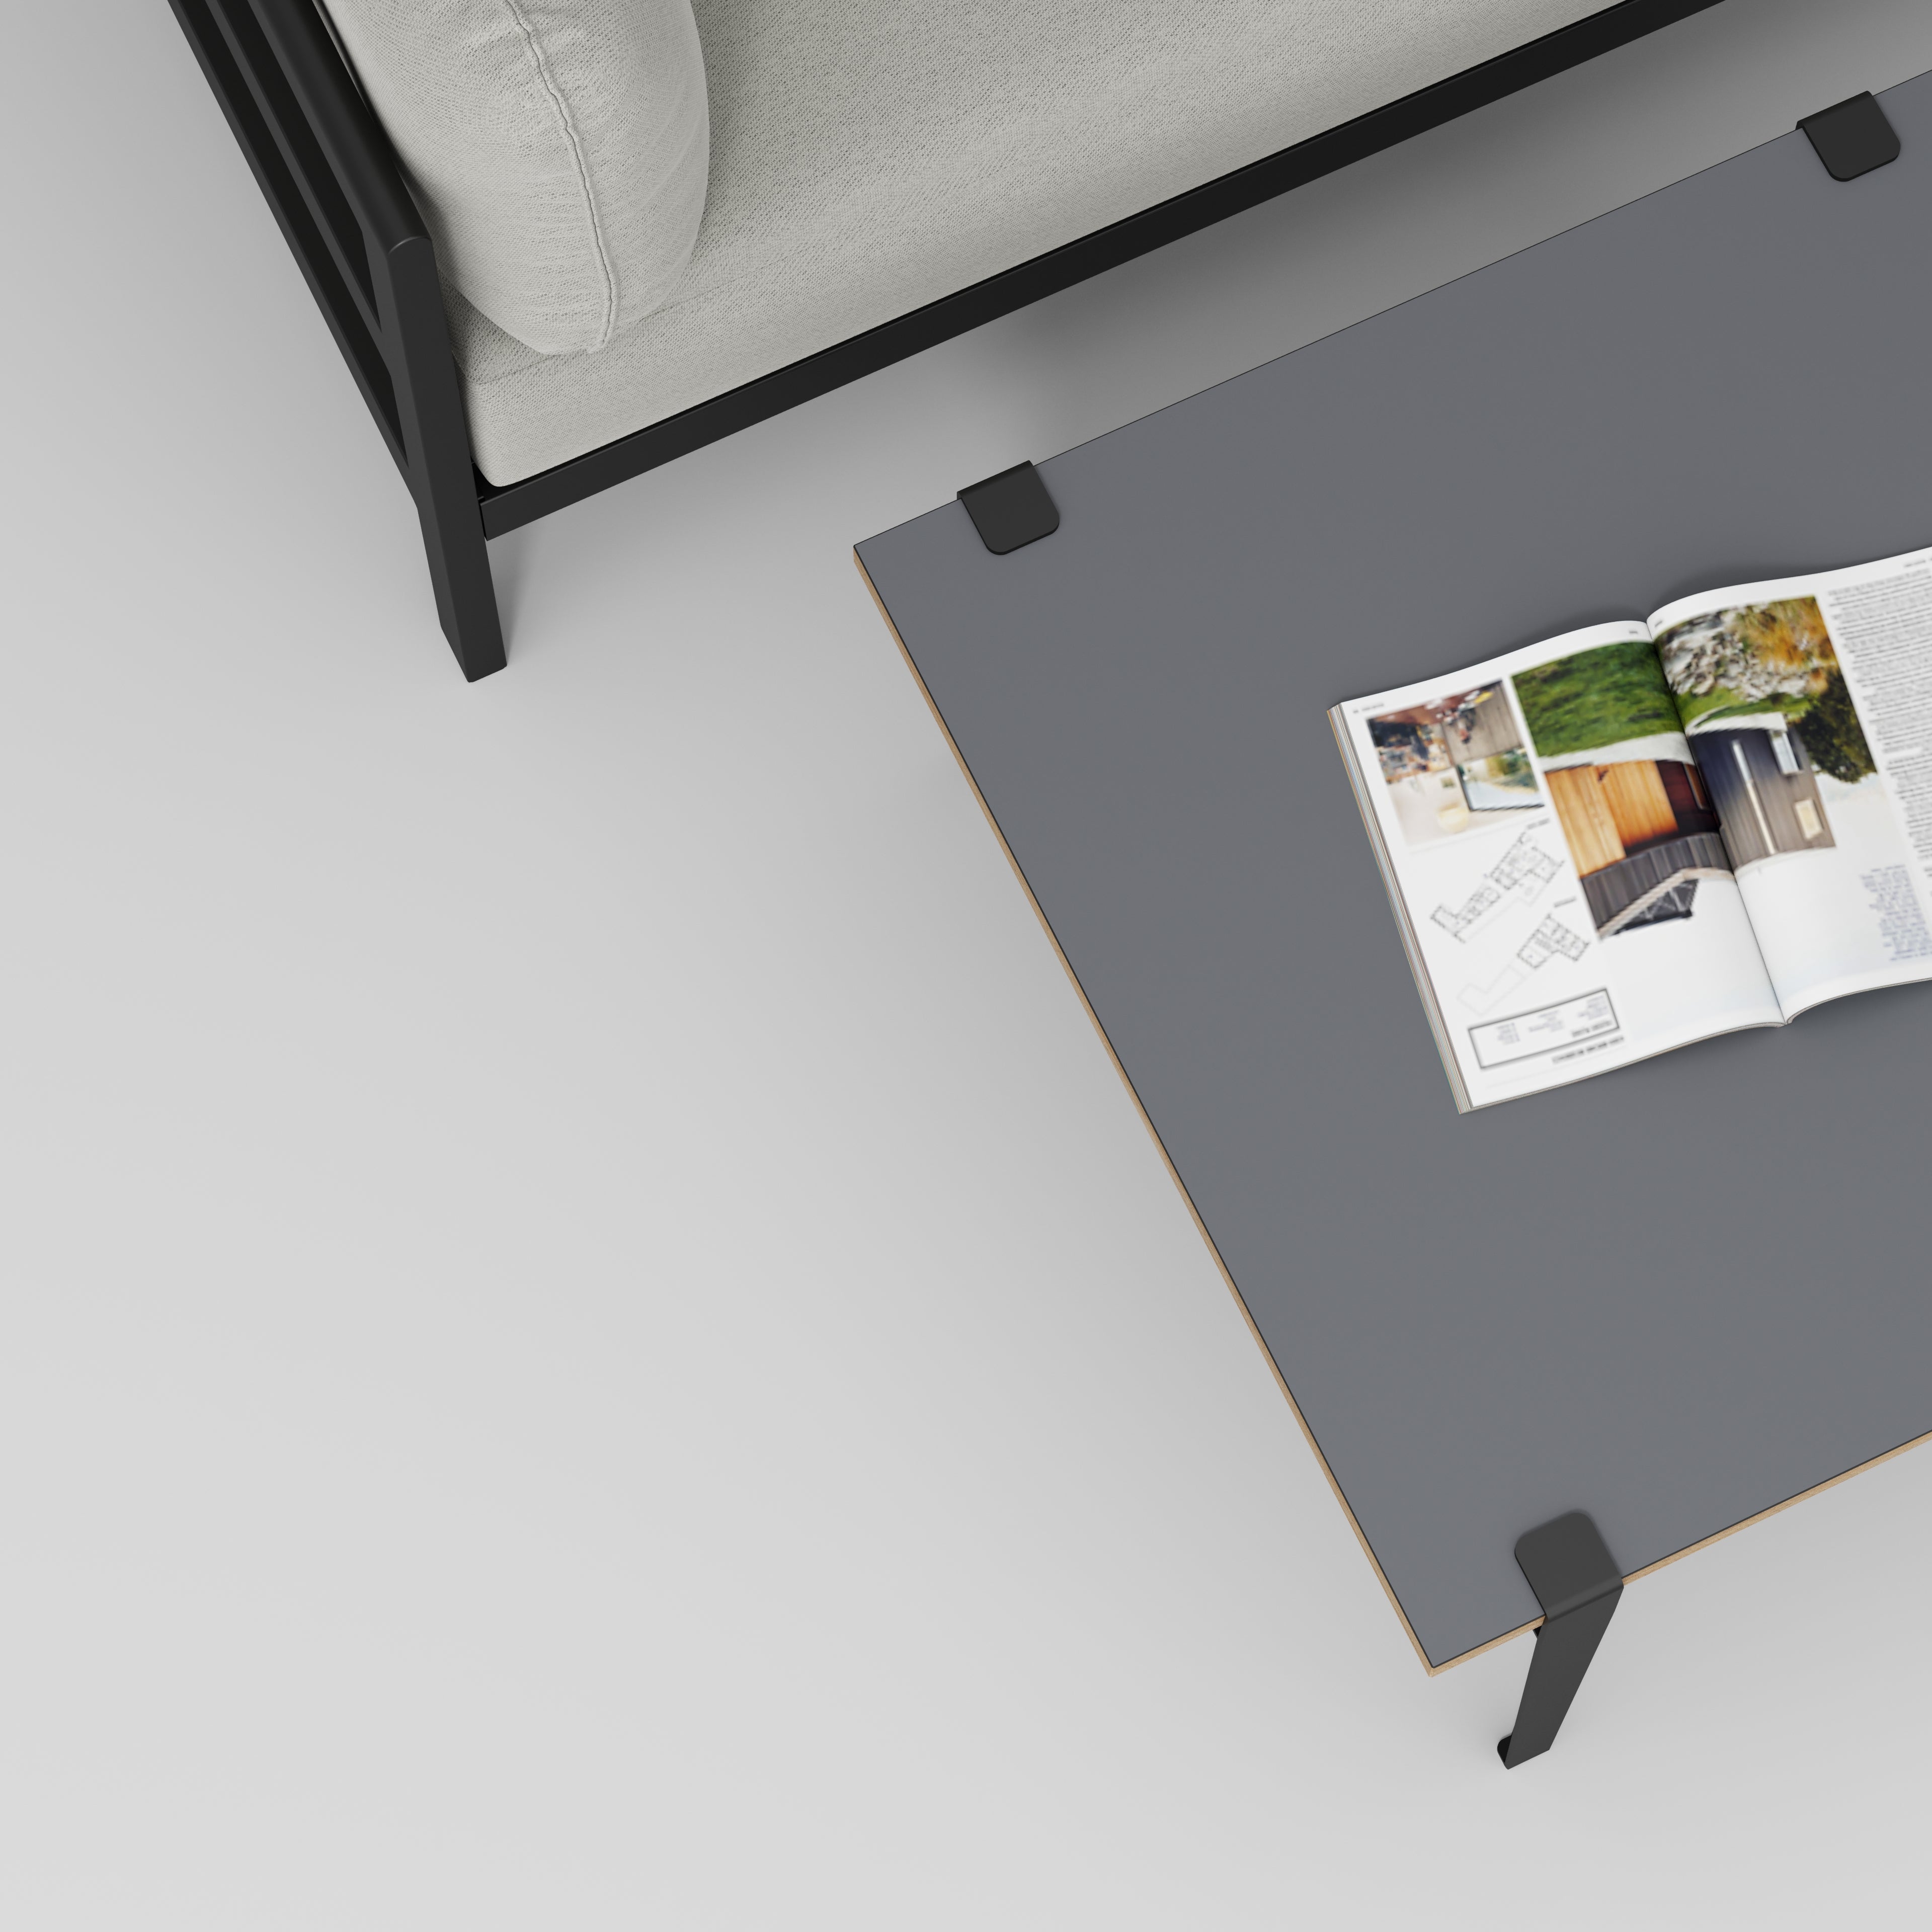 Coffee Table with Black Tiptoe Legs - Formica Tornado Grey - 800(w) x 800(d) x 430(h)